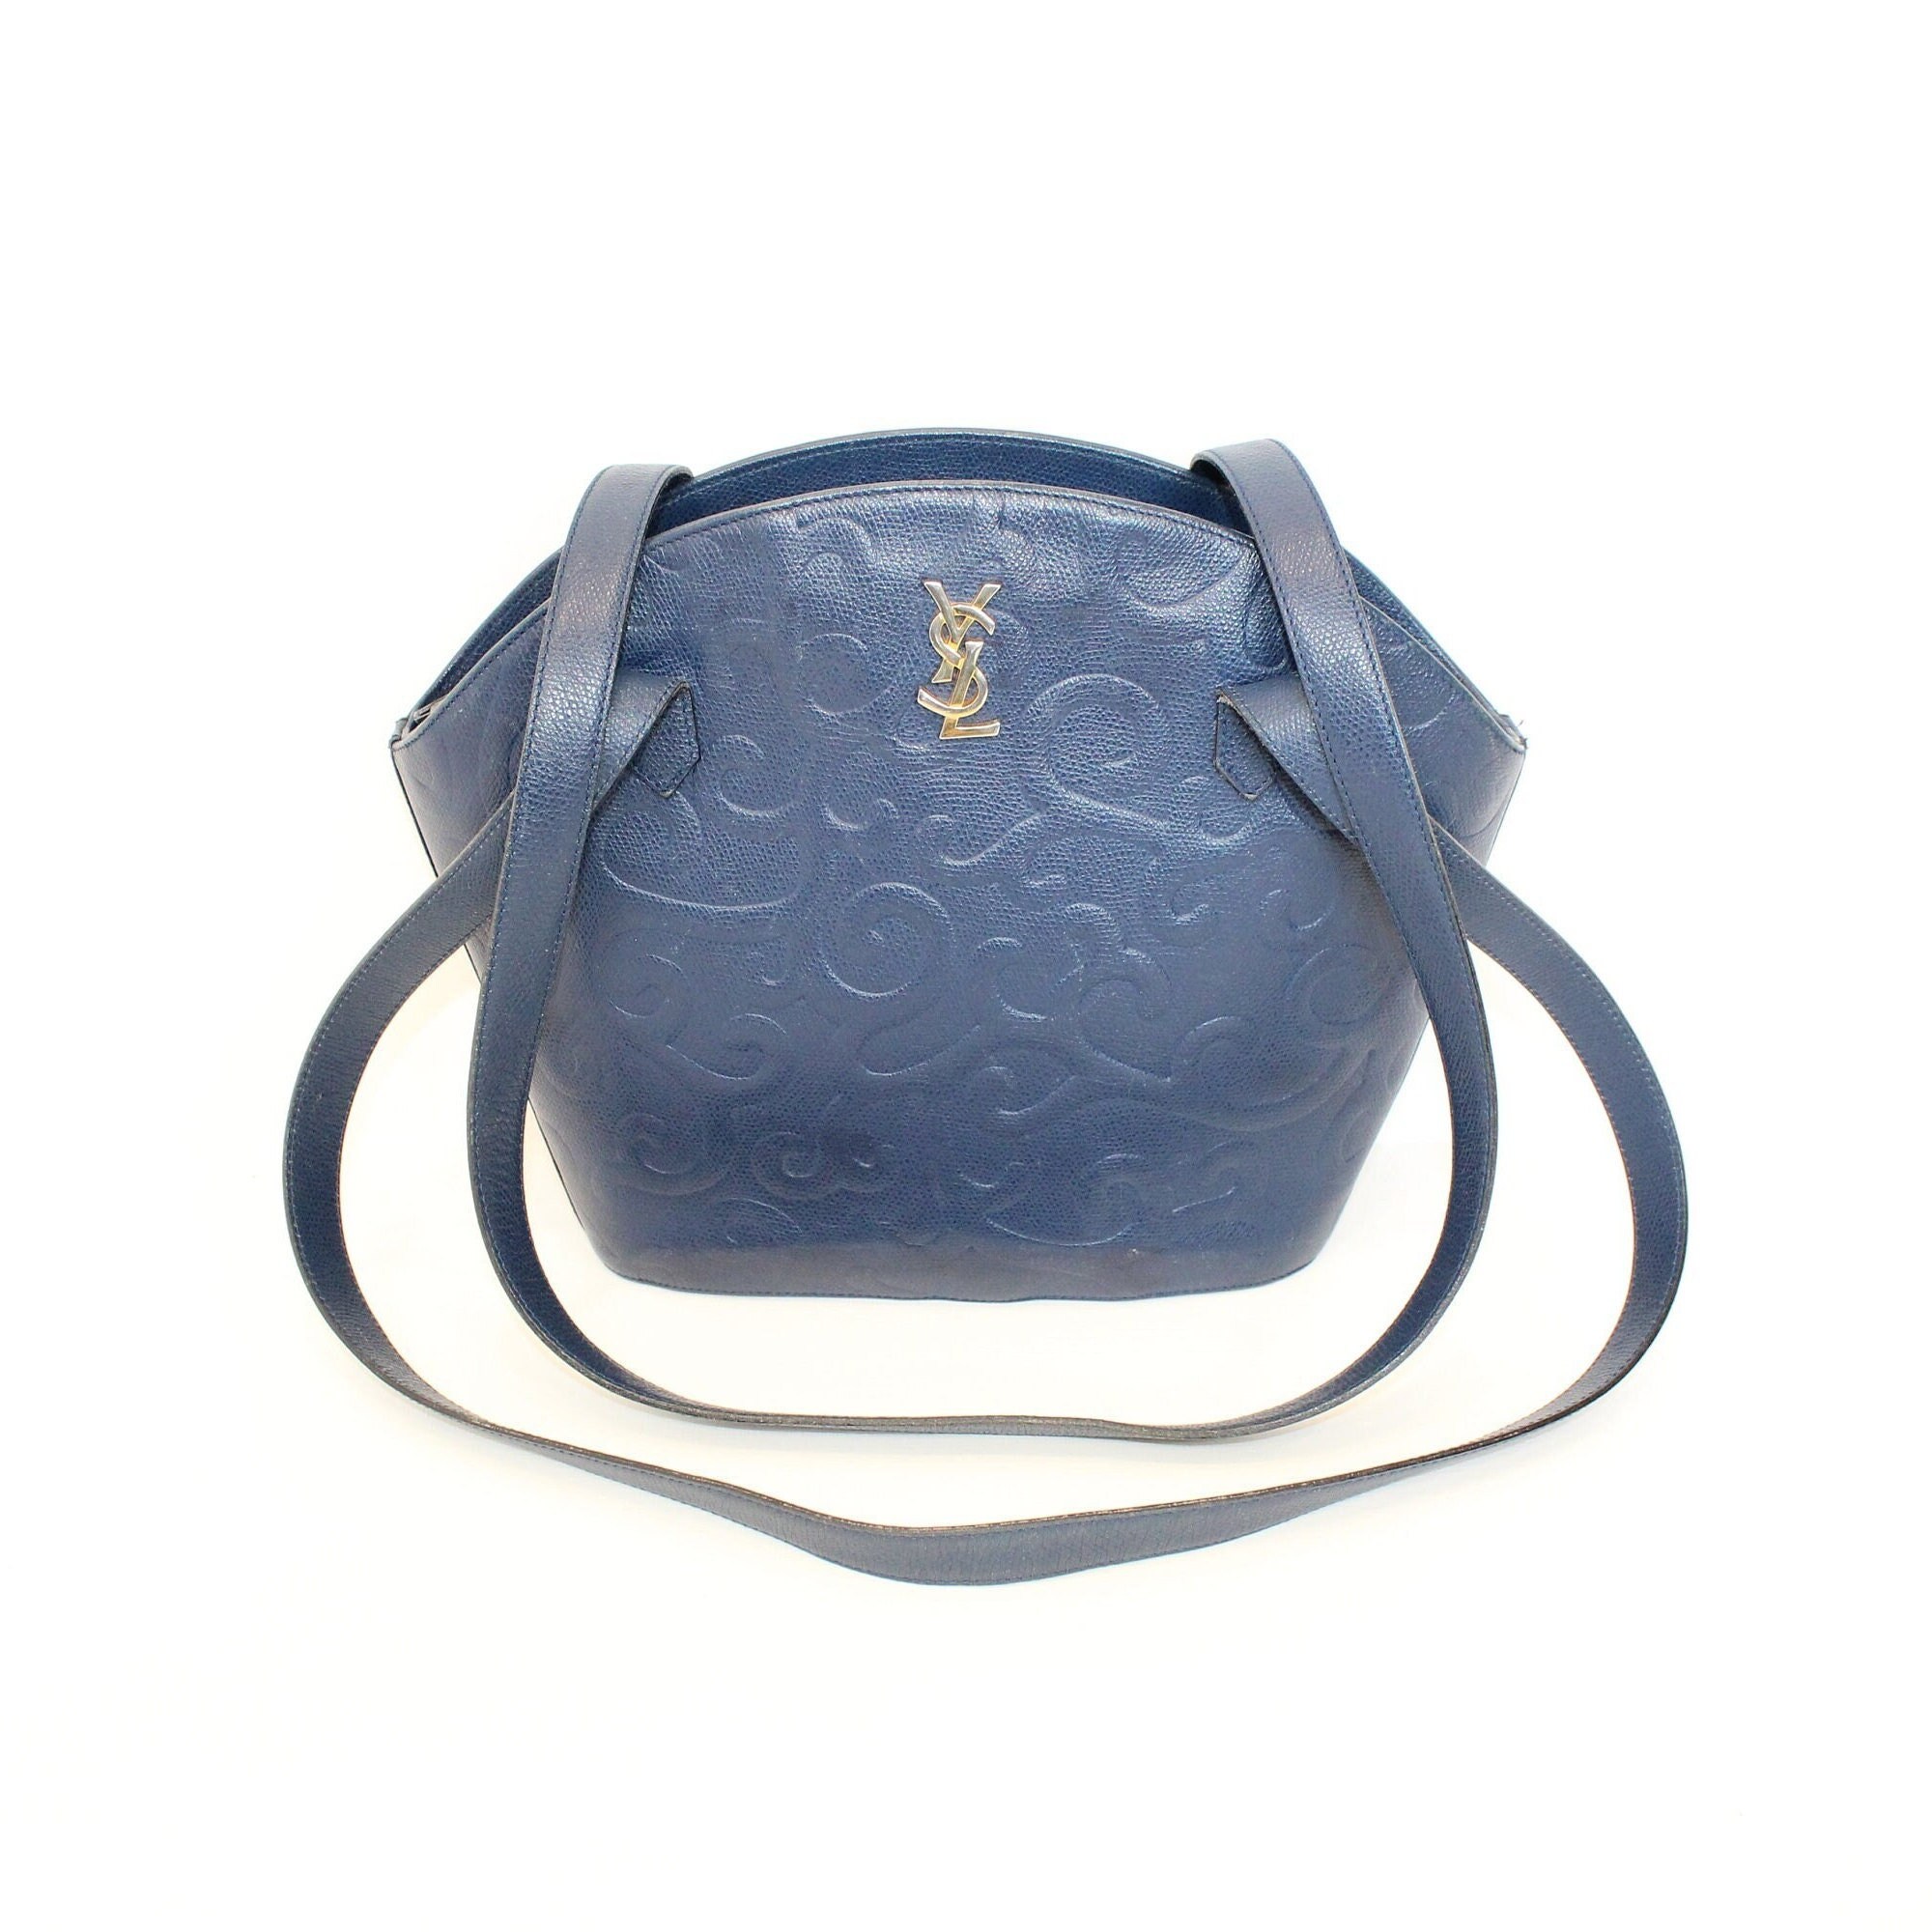 YVES SAINT LAURENT Small Kate Tassel Leather Crossbody Bag Teal - 15%